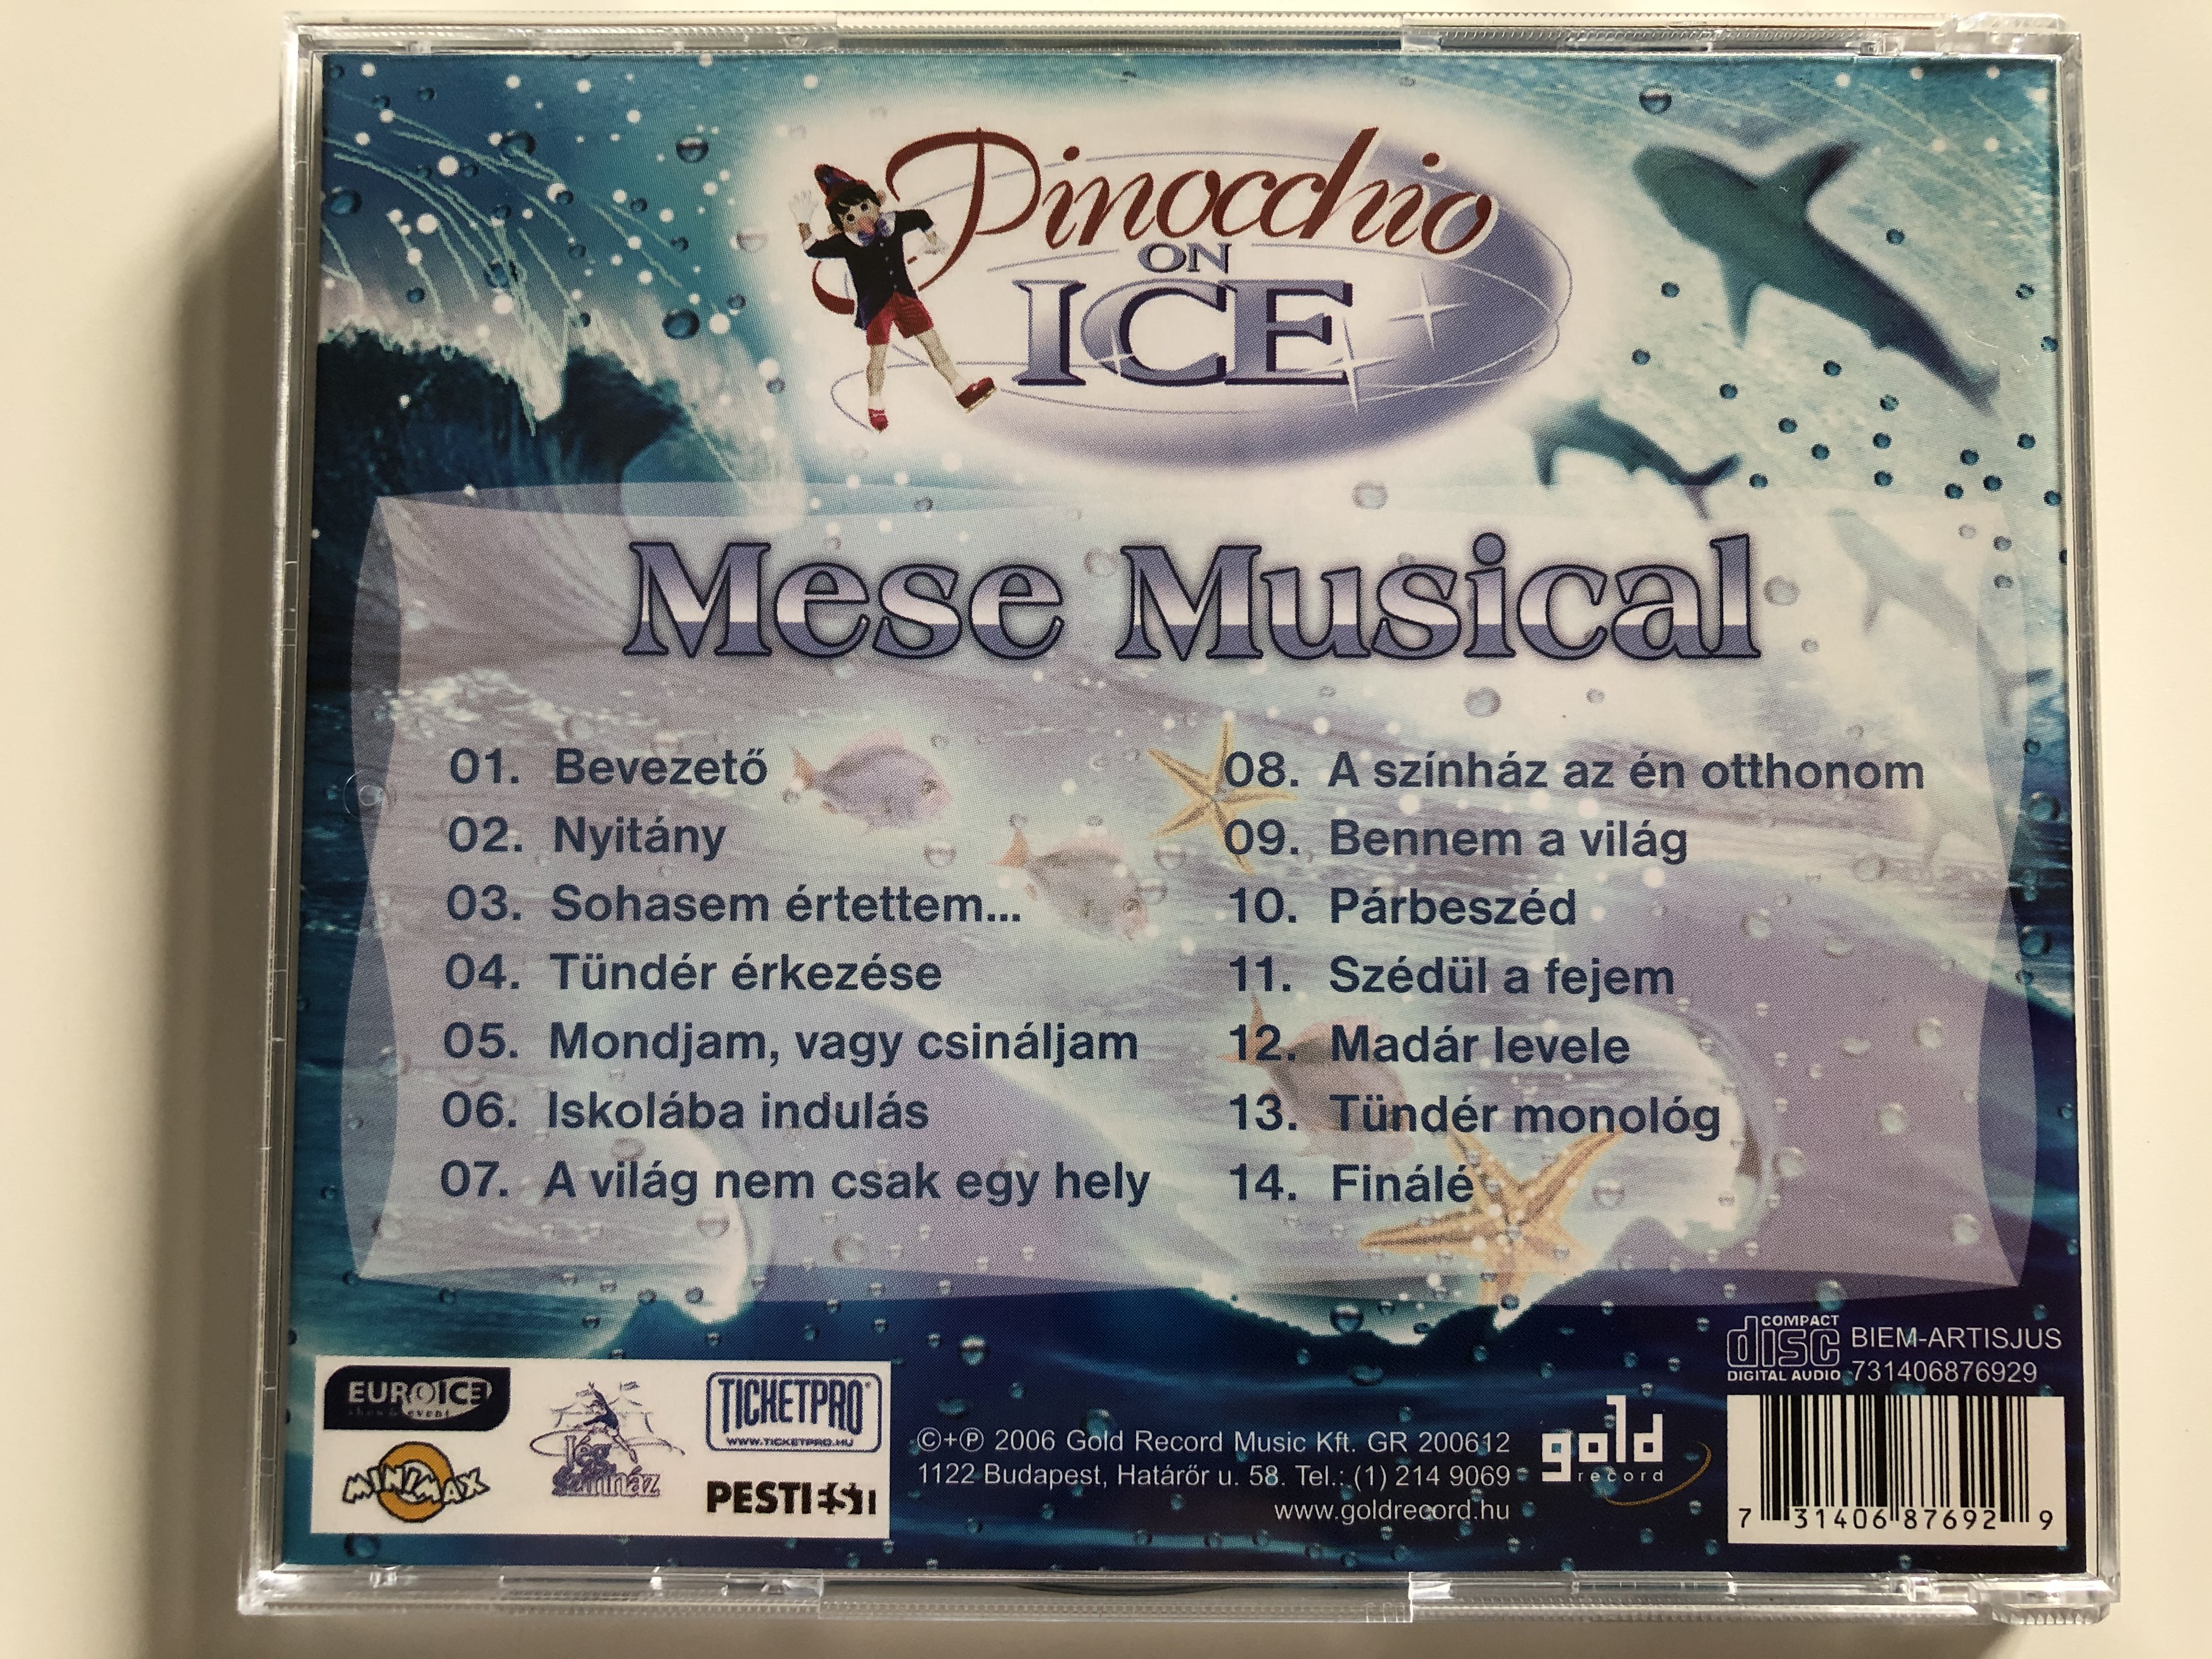 pinocchio-on-ice-mese-musical-euro-ice-audio-cd-2006-gr-200612-5-.jpg